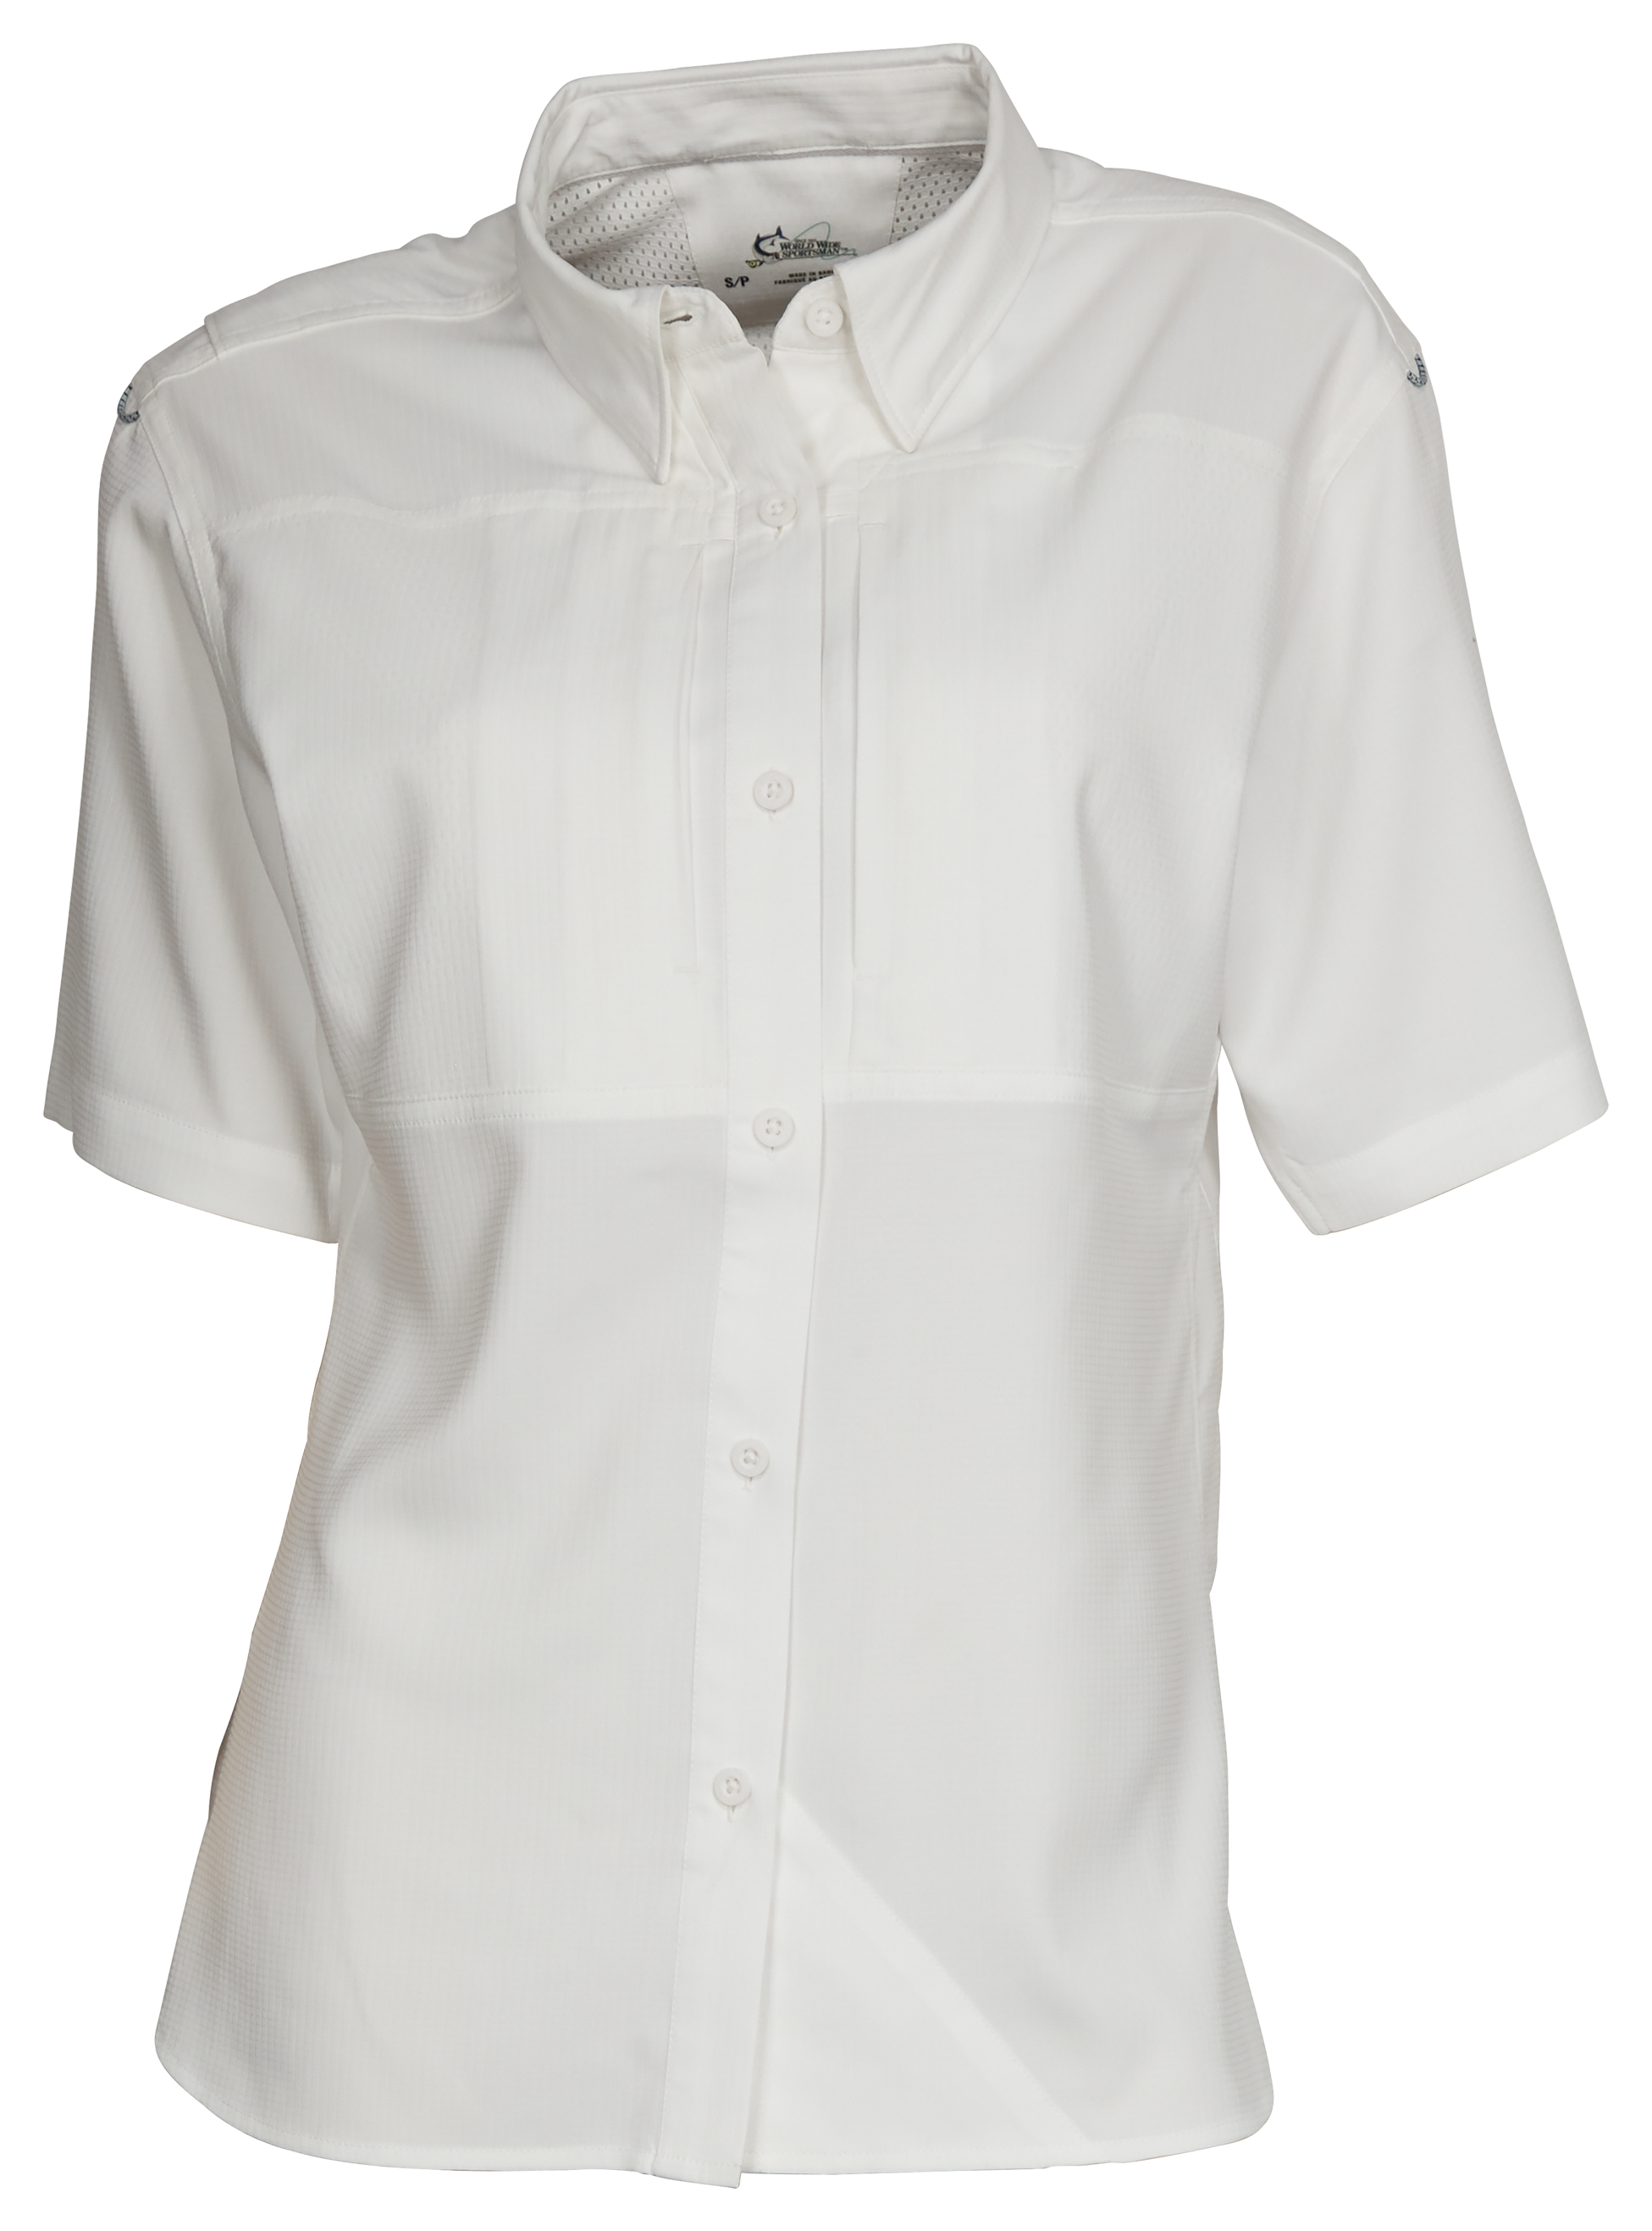 World Wide Sportsman Marina Short-Sleeve Shirt for Ladies - Bright White - M